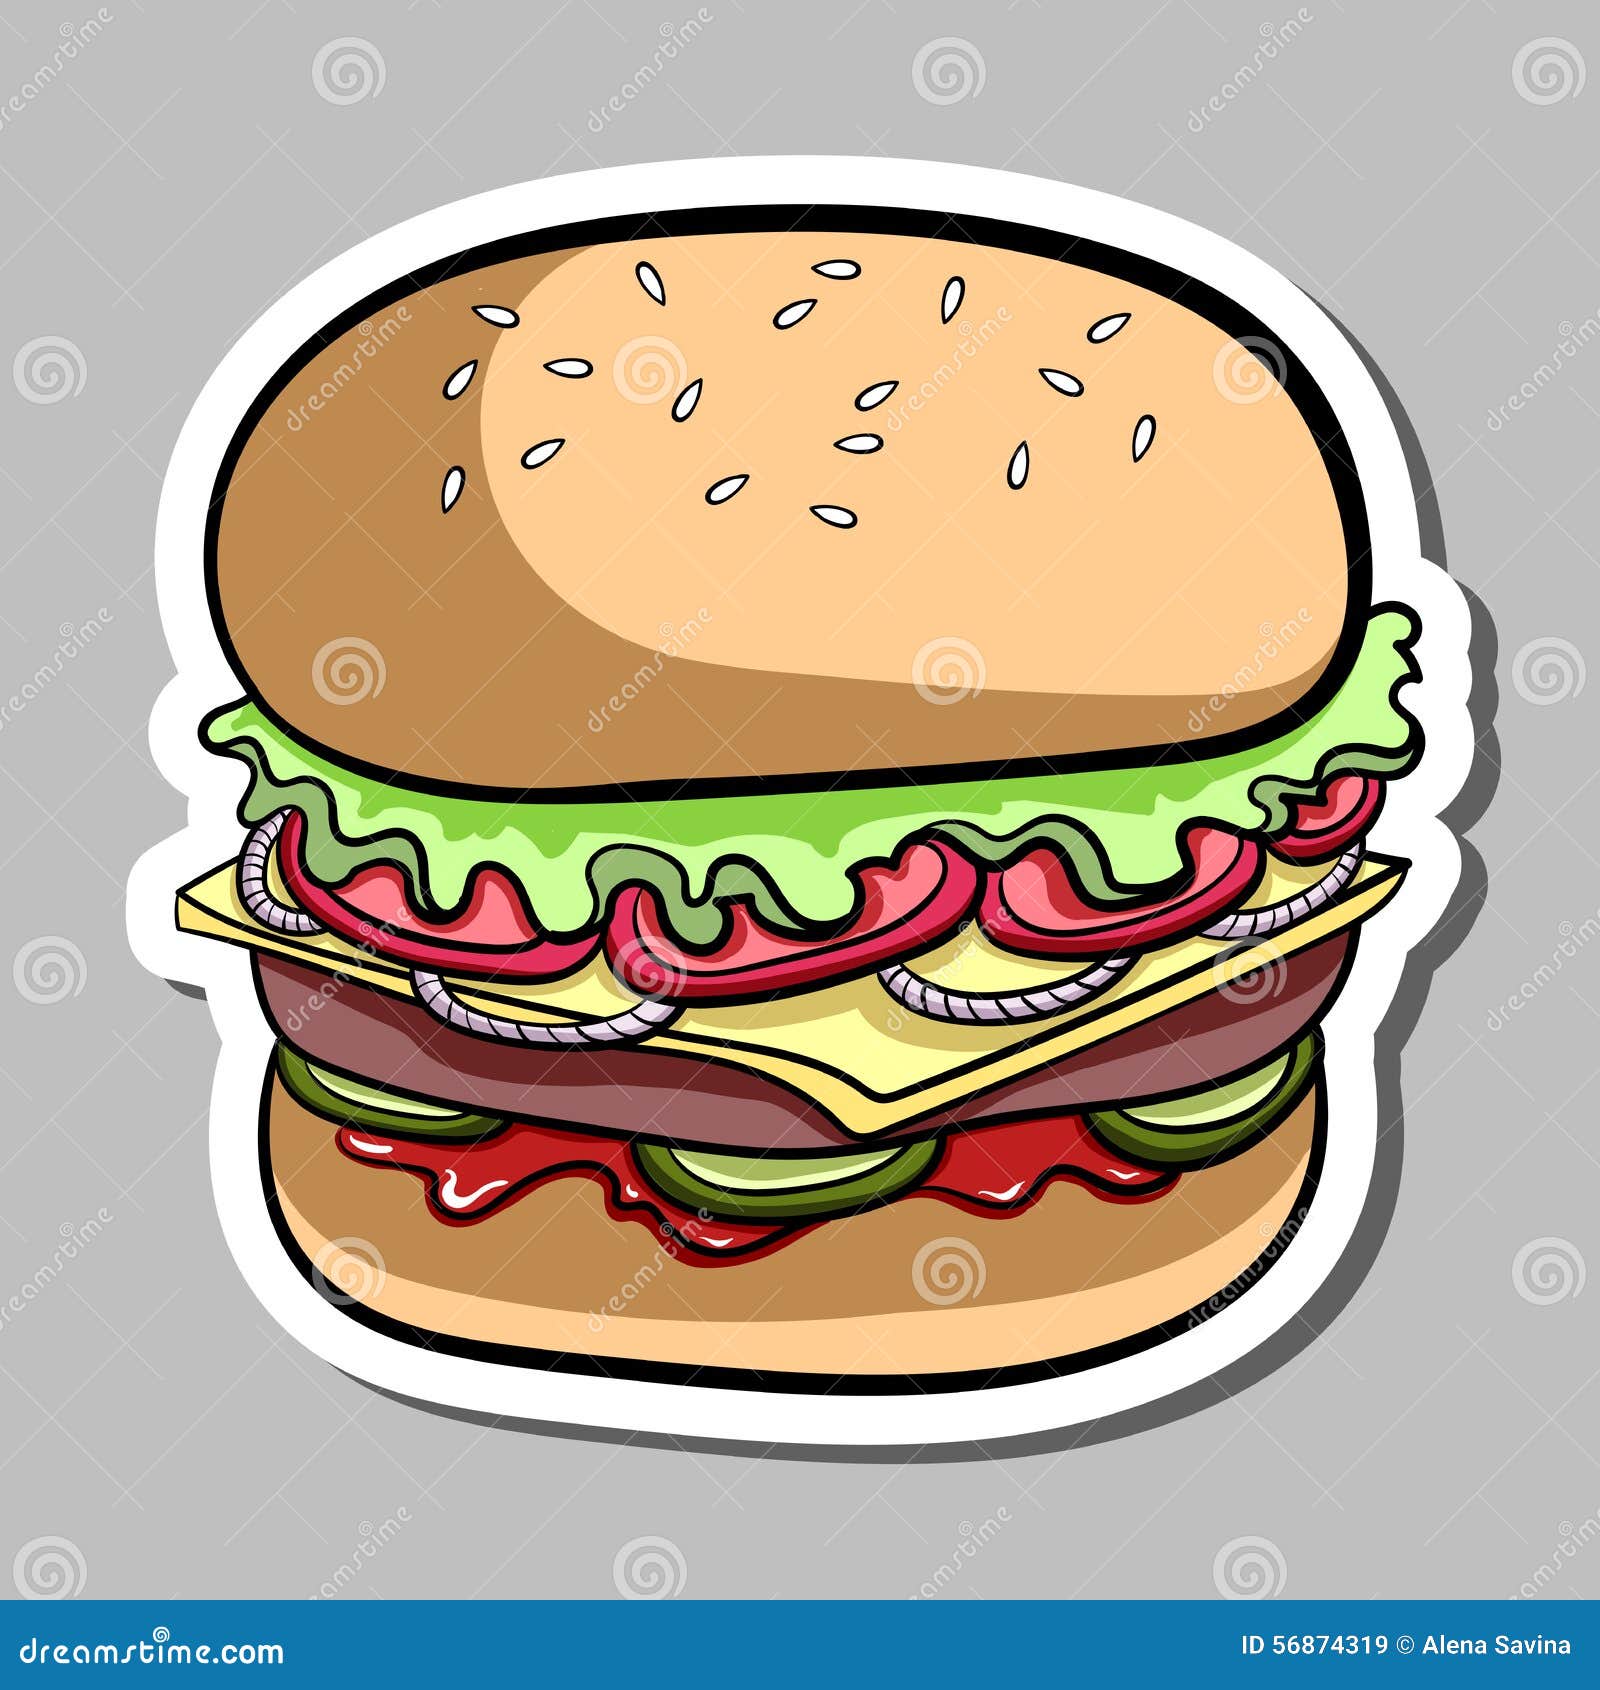 Hamburger Sticker stock vector. Illustration of onion - 56874319